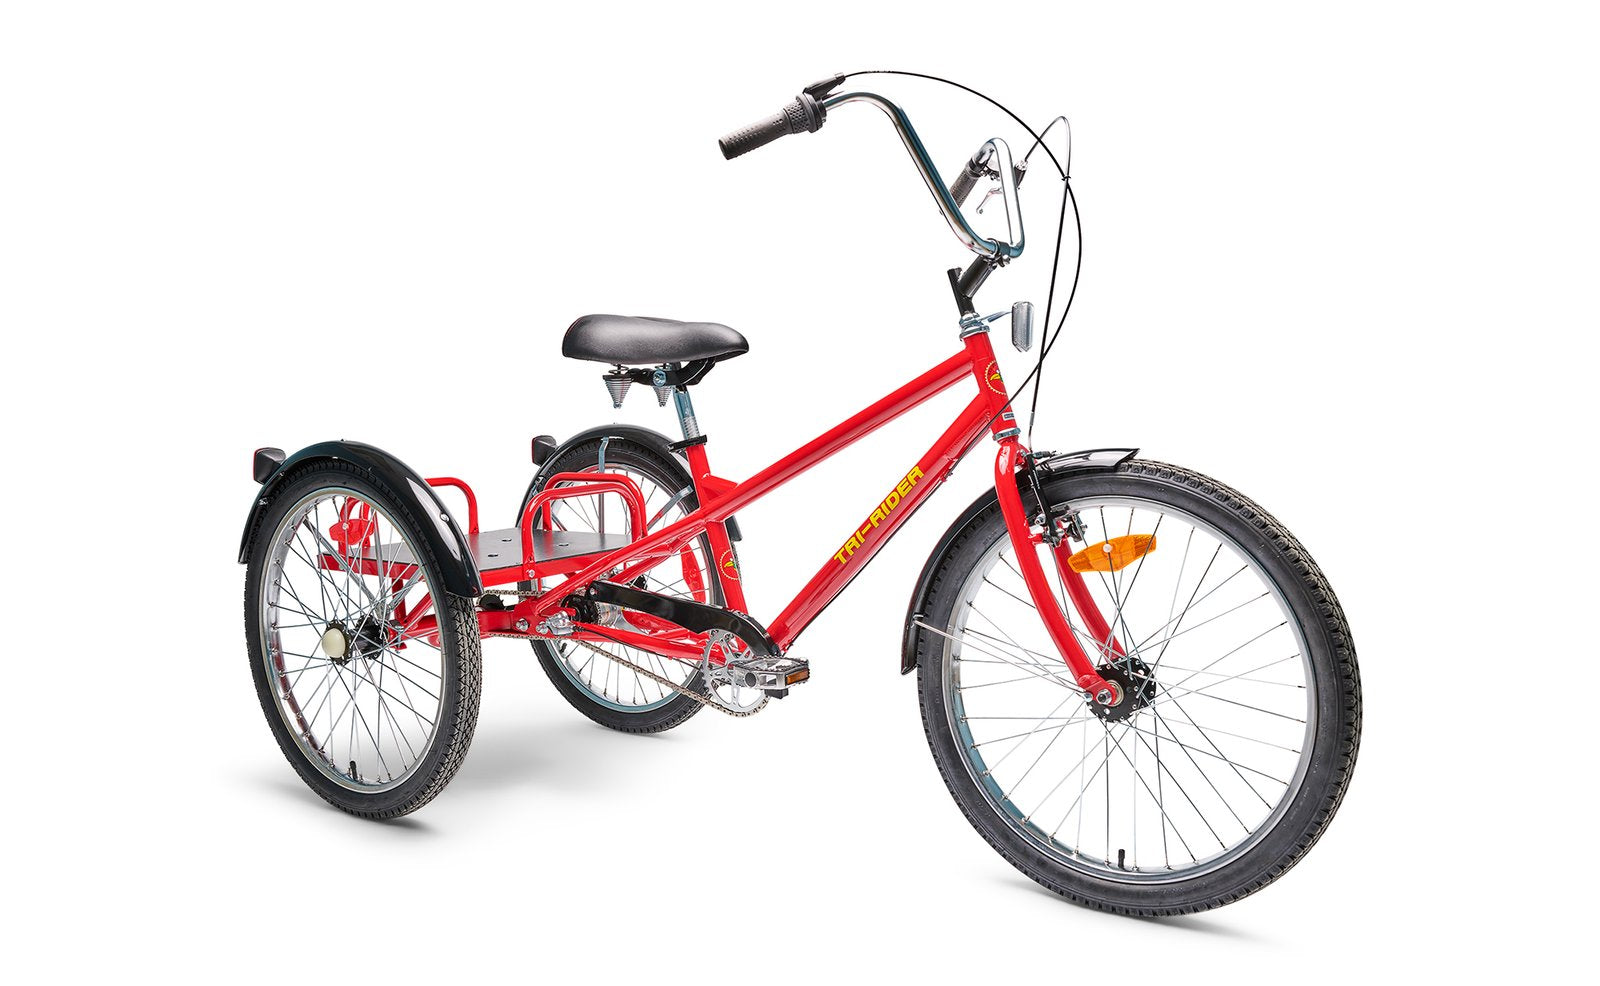 Belize Bike 96443 TRI-RIDER 3-SPEED Industrial 24" Adult Tricycle